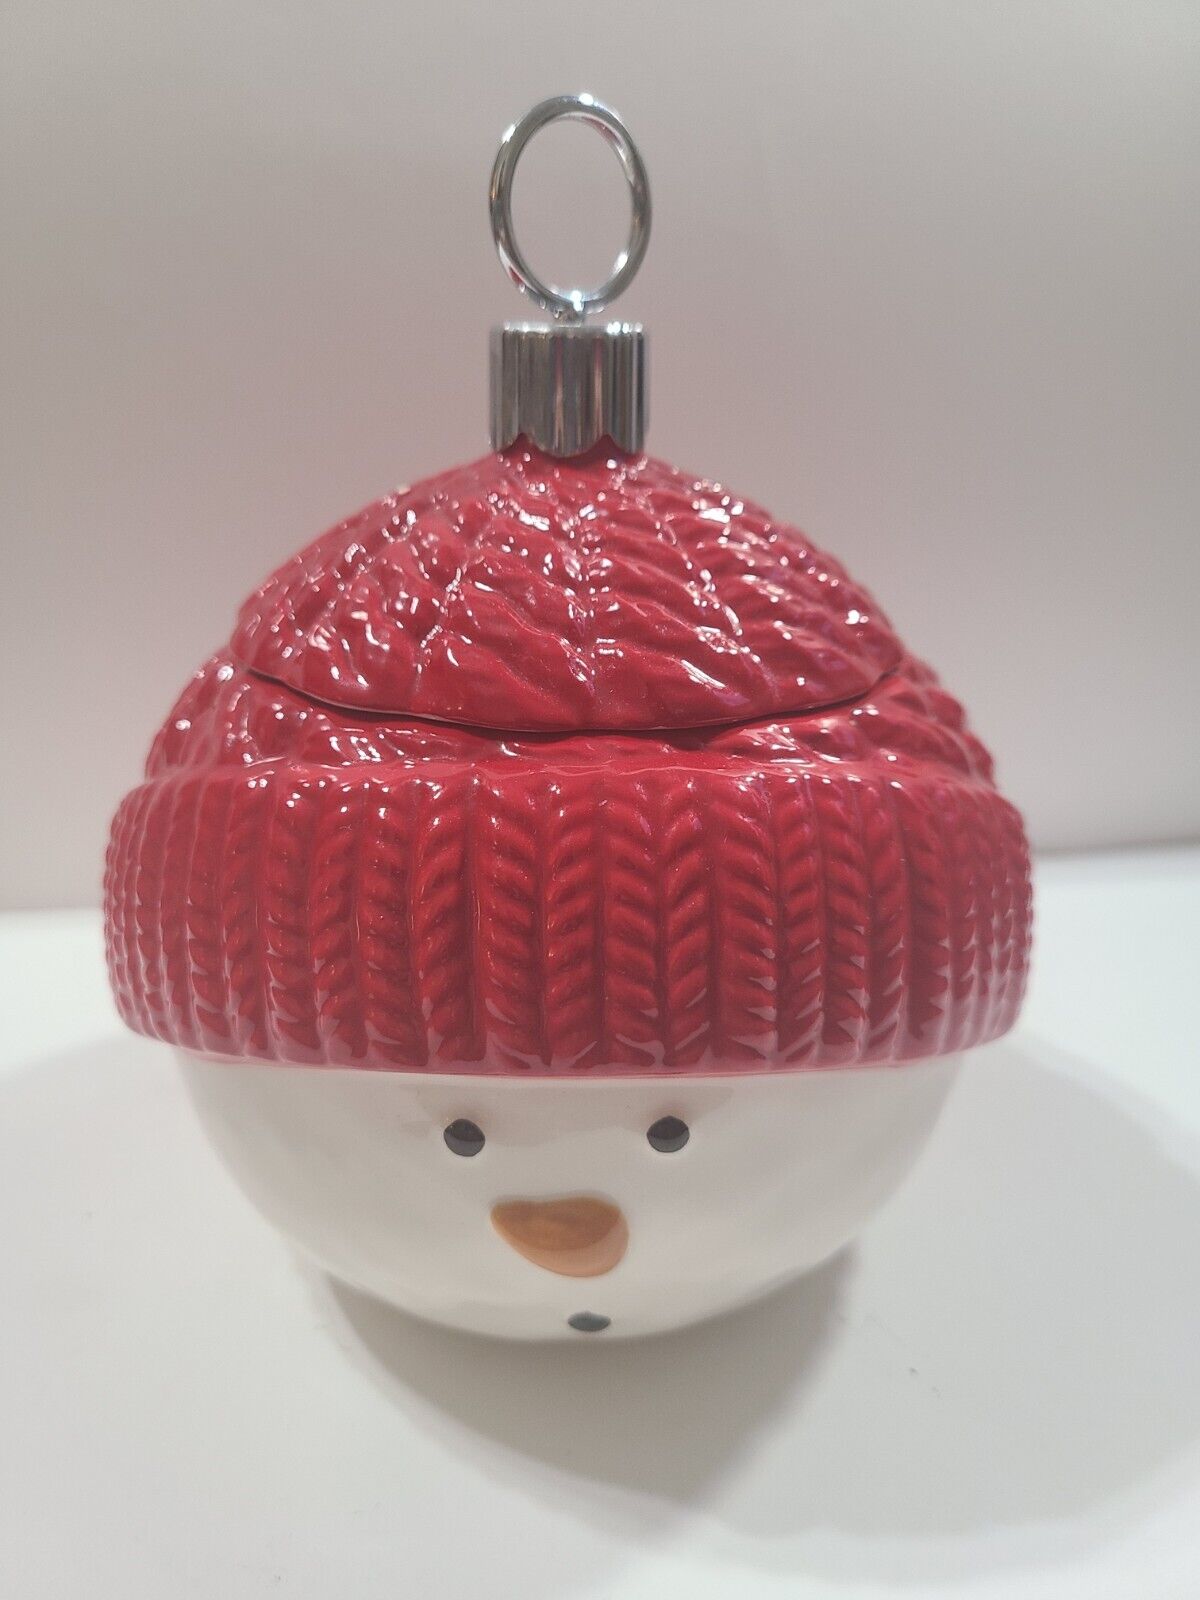 Teleflora 2020 Christmas Snowman Ornament Lidded Jar / Candy Dish Holiday Decor